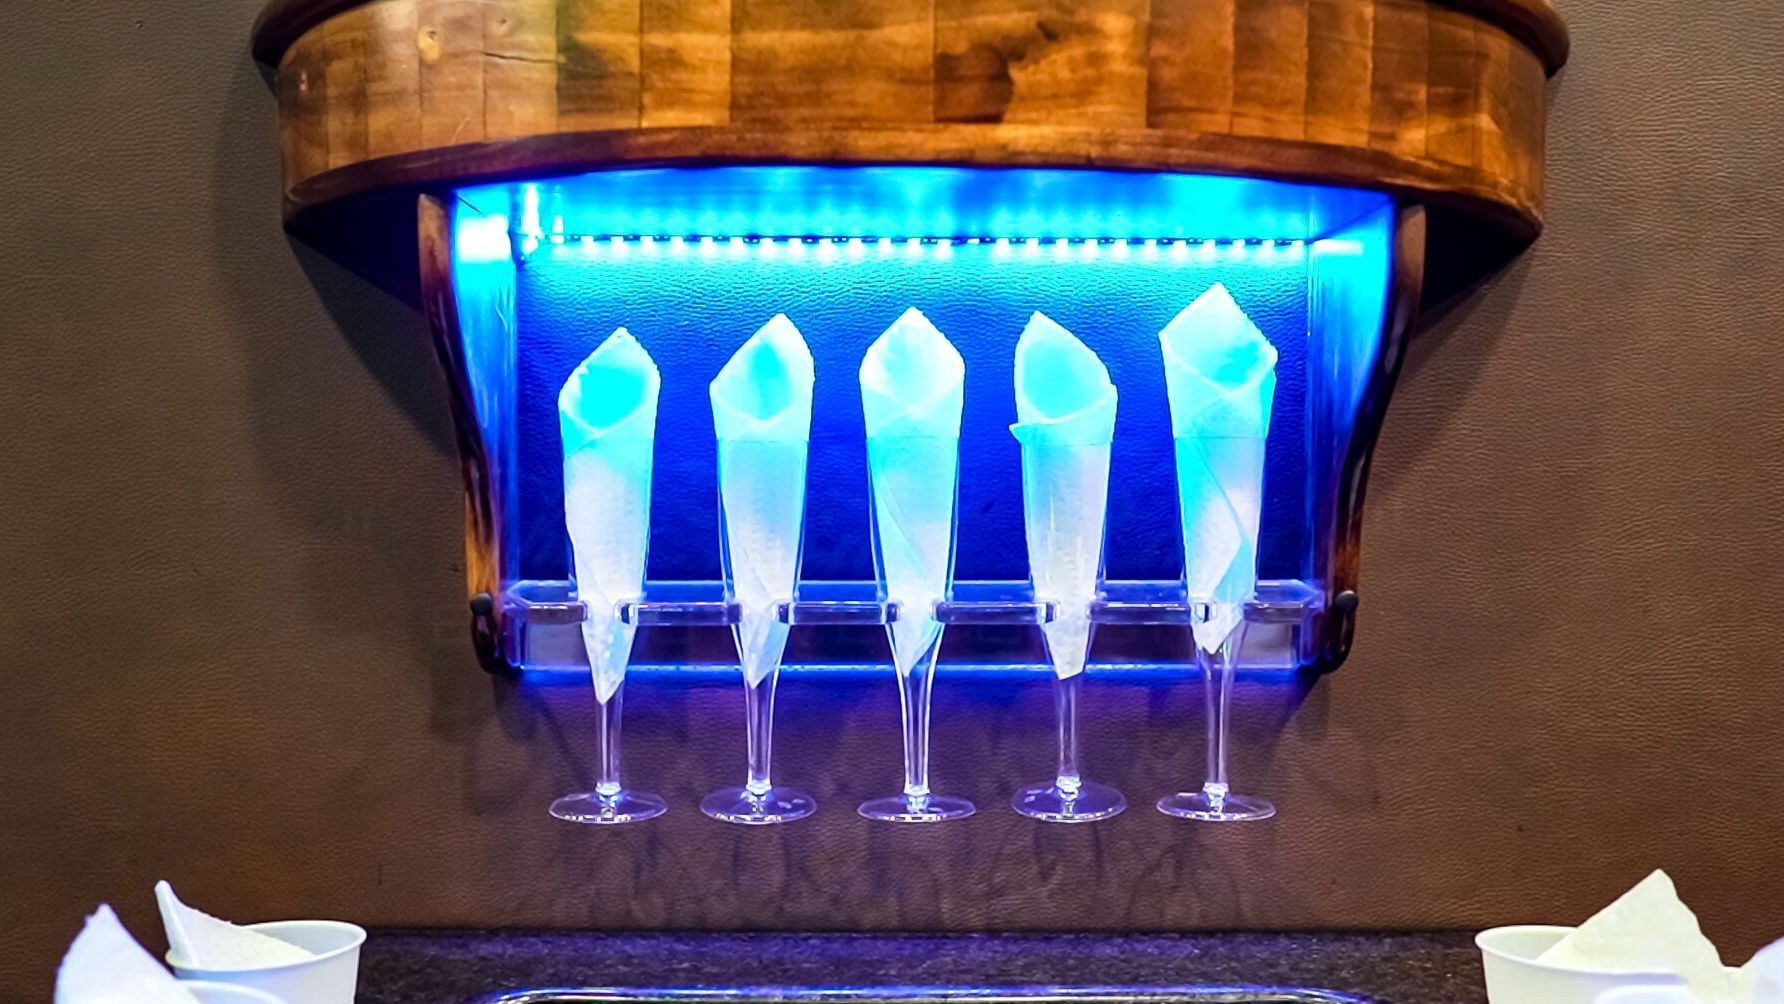 A row of wine glasses sitting under a blue light executive coaches premium chauffeur service memphis  tn